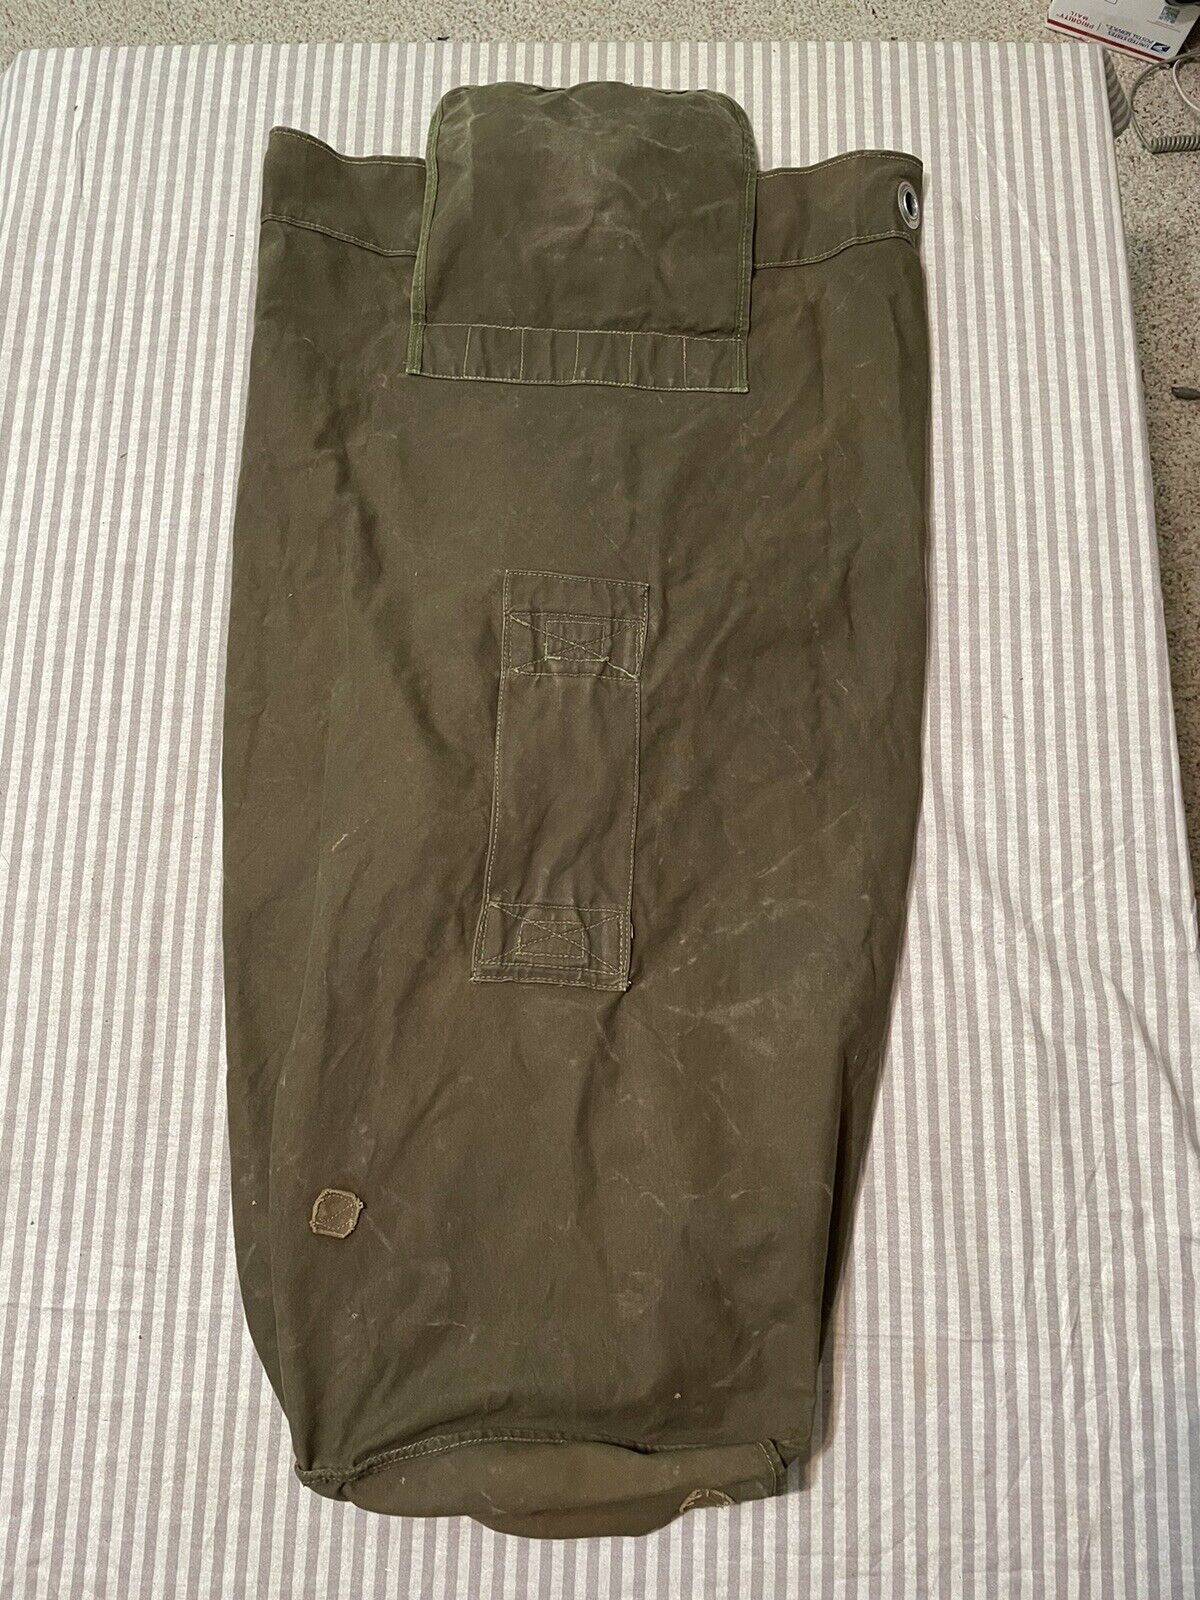 Vintage Military Duffel Bag Olive Green Vietnam Era Large 